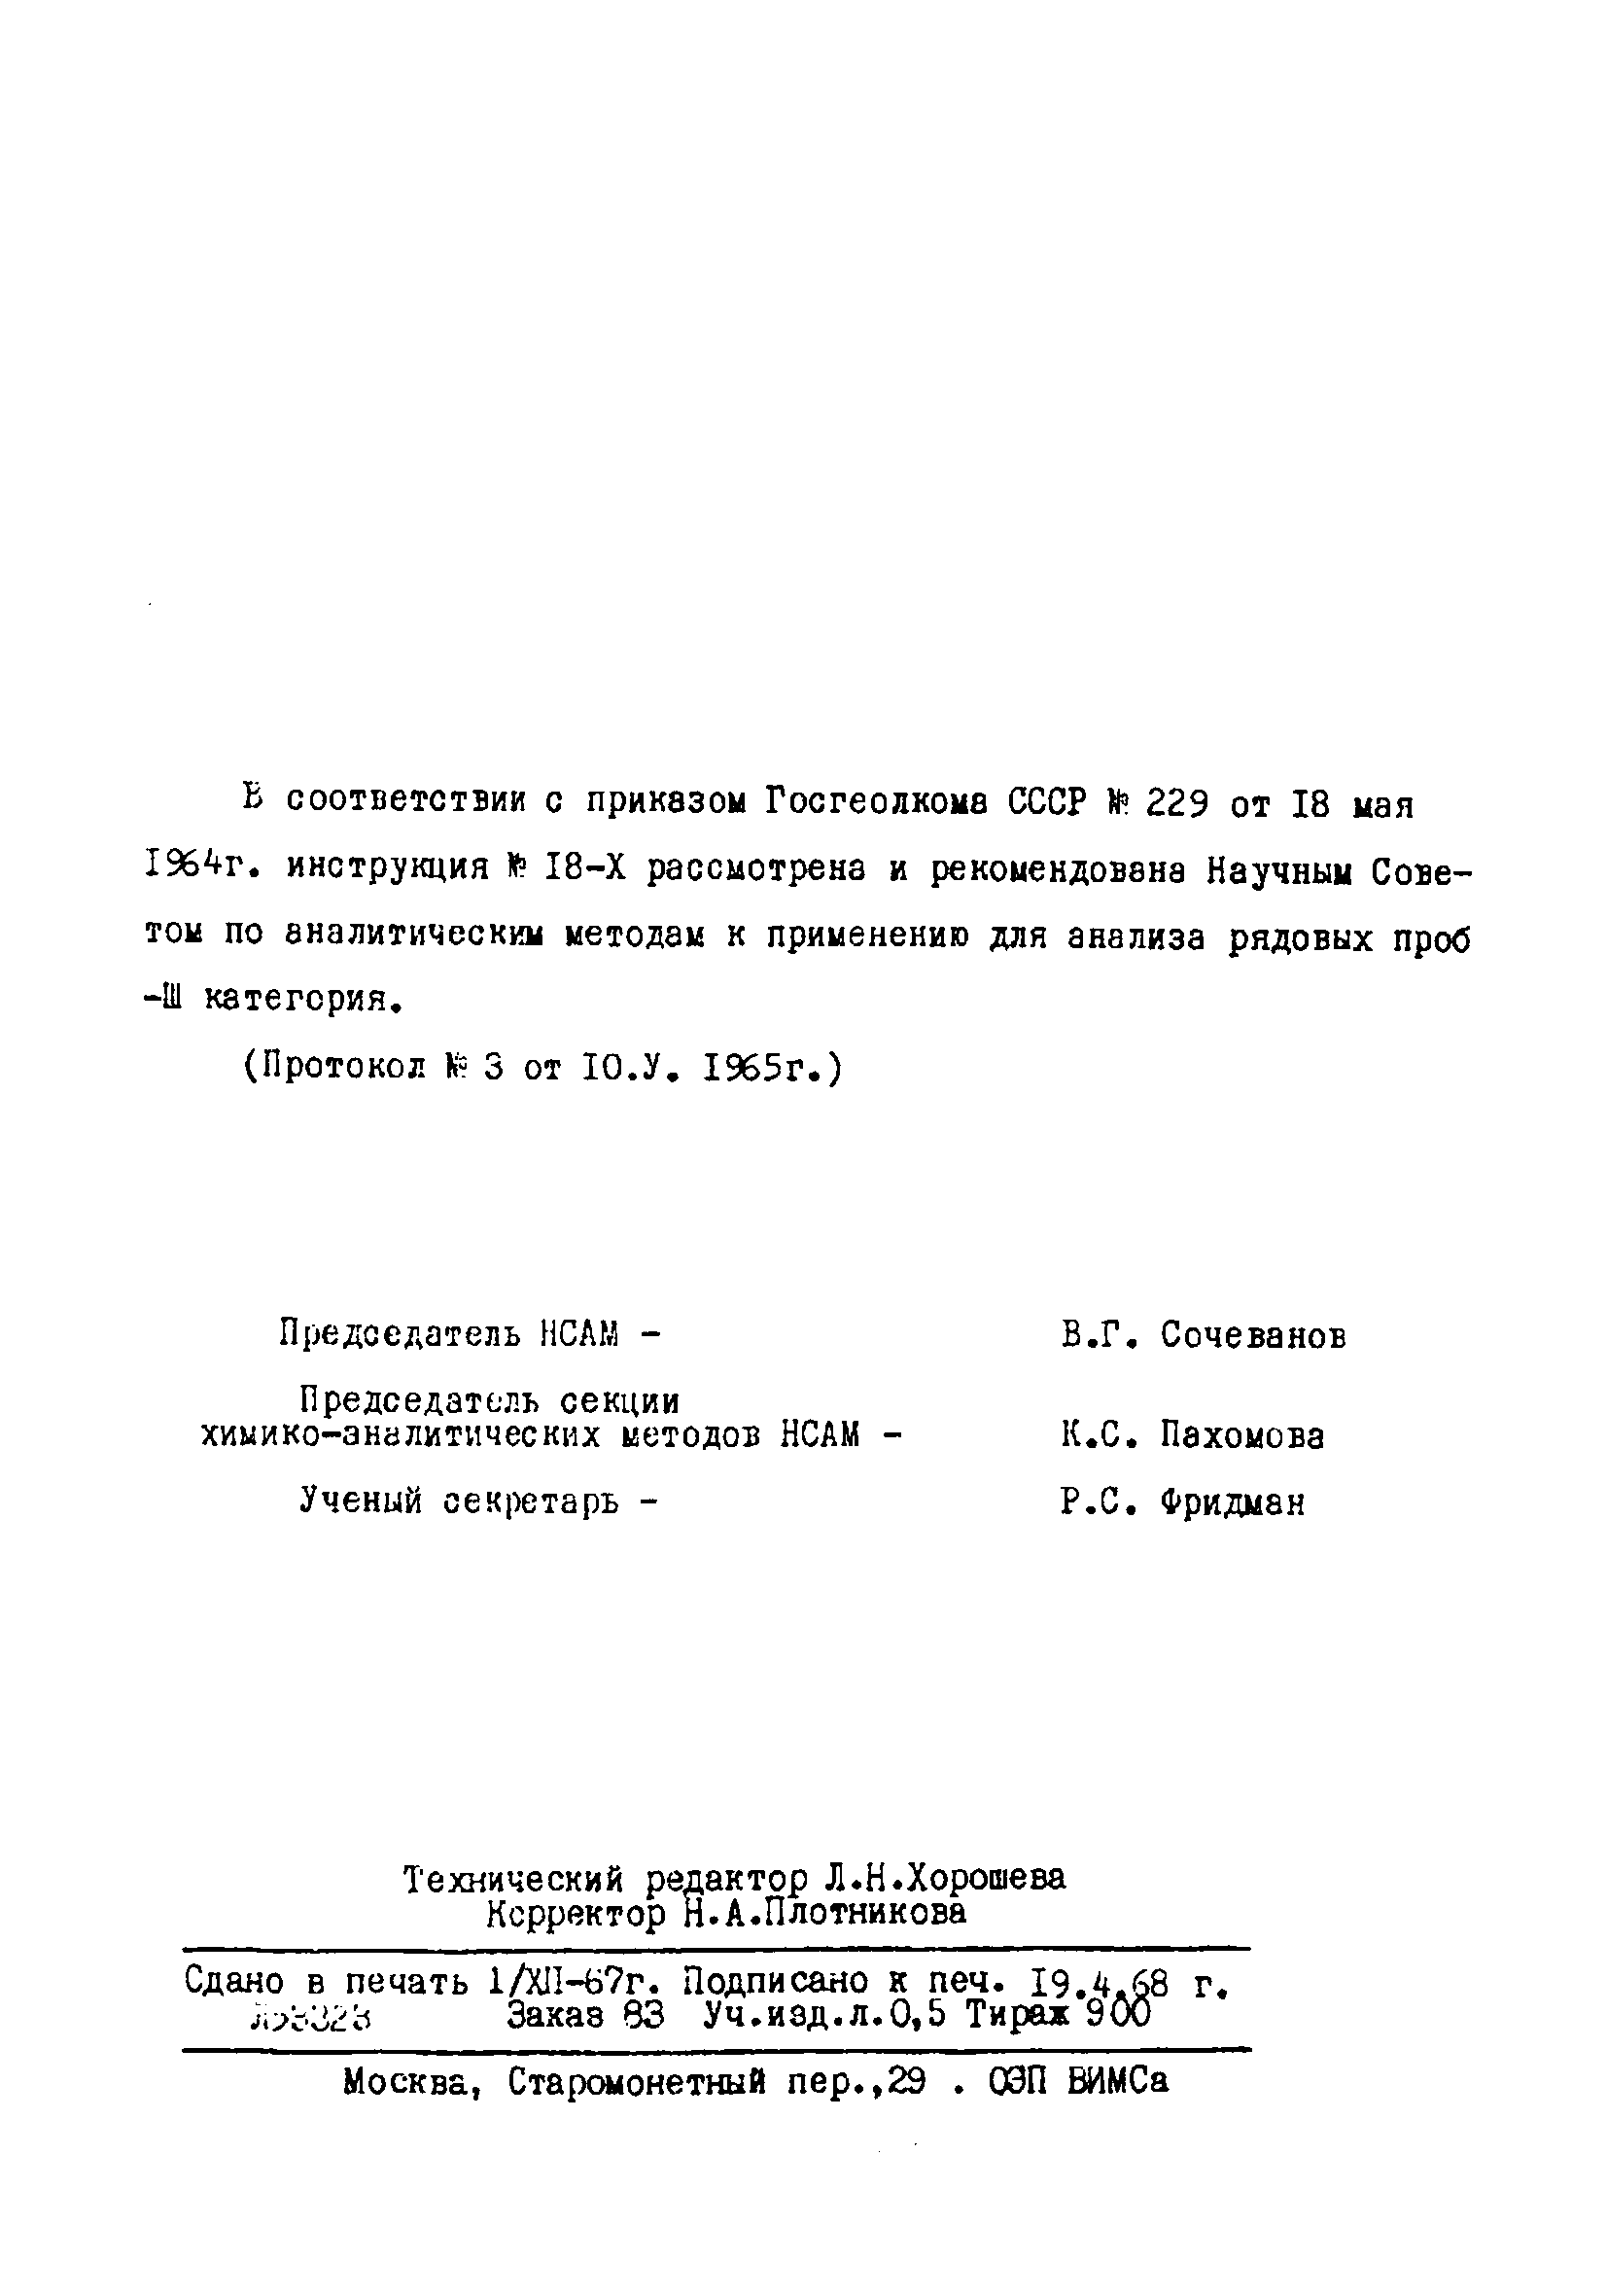 Инструкция НСАМ 18-Х